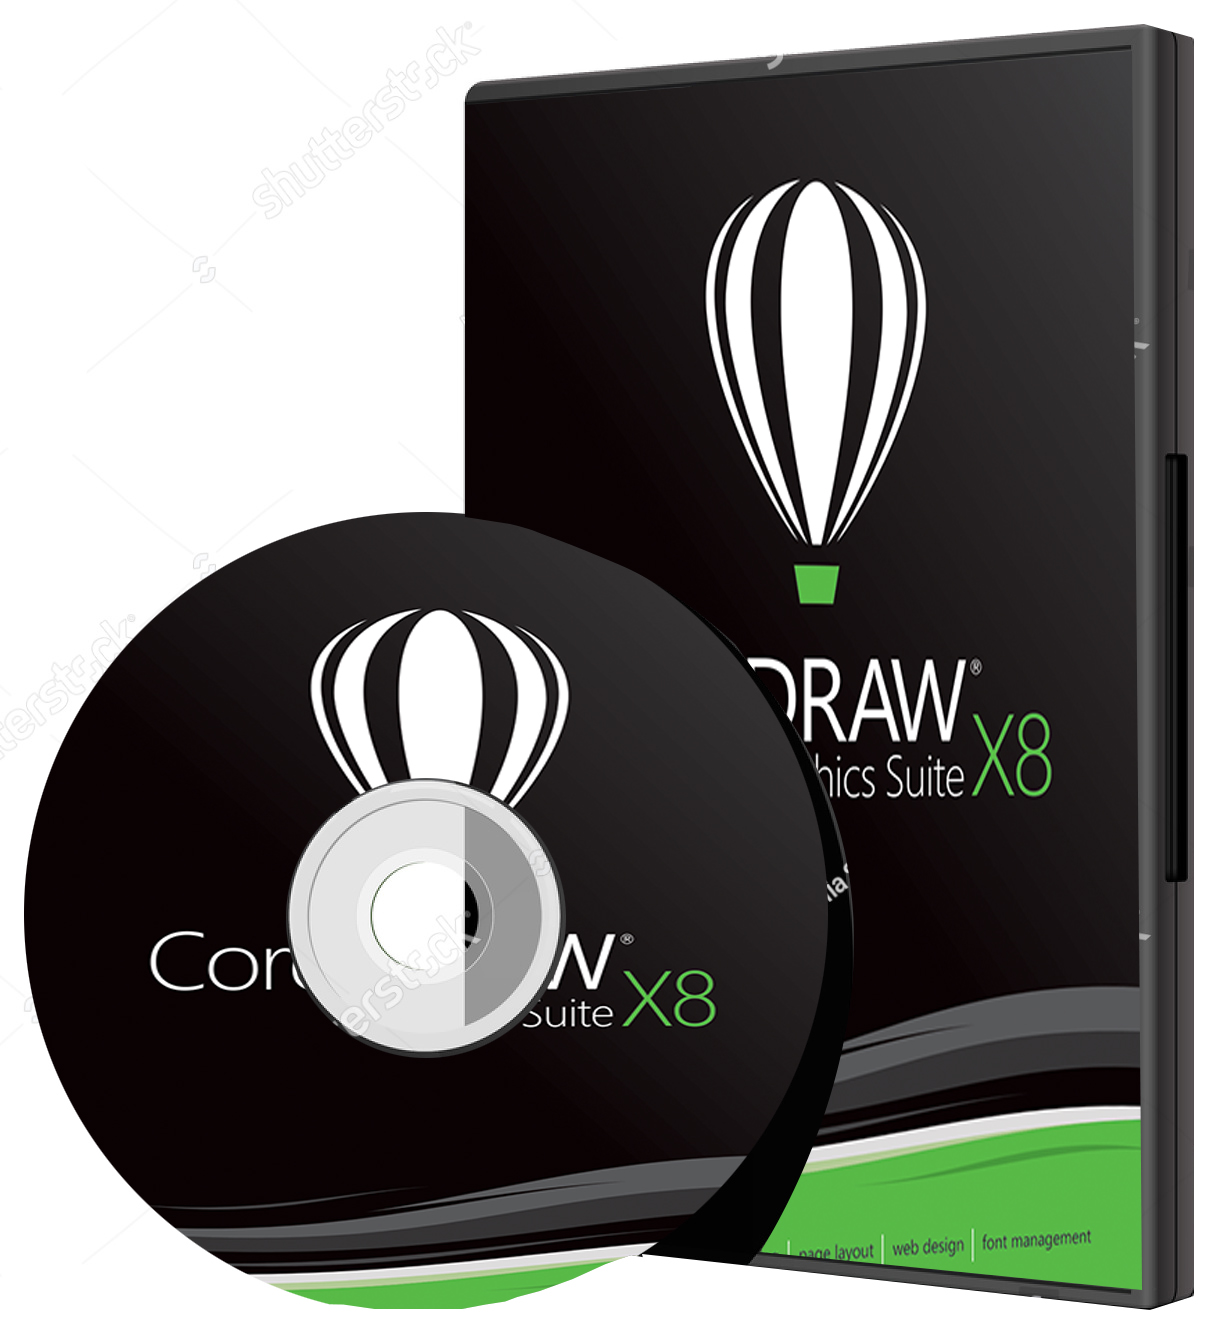 coreldraw free download full version for windows 7 32 bit